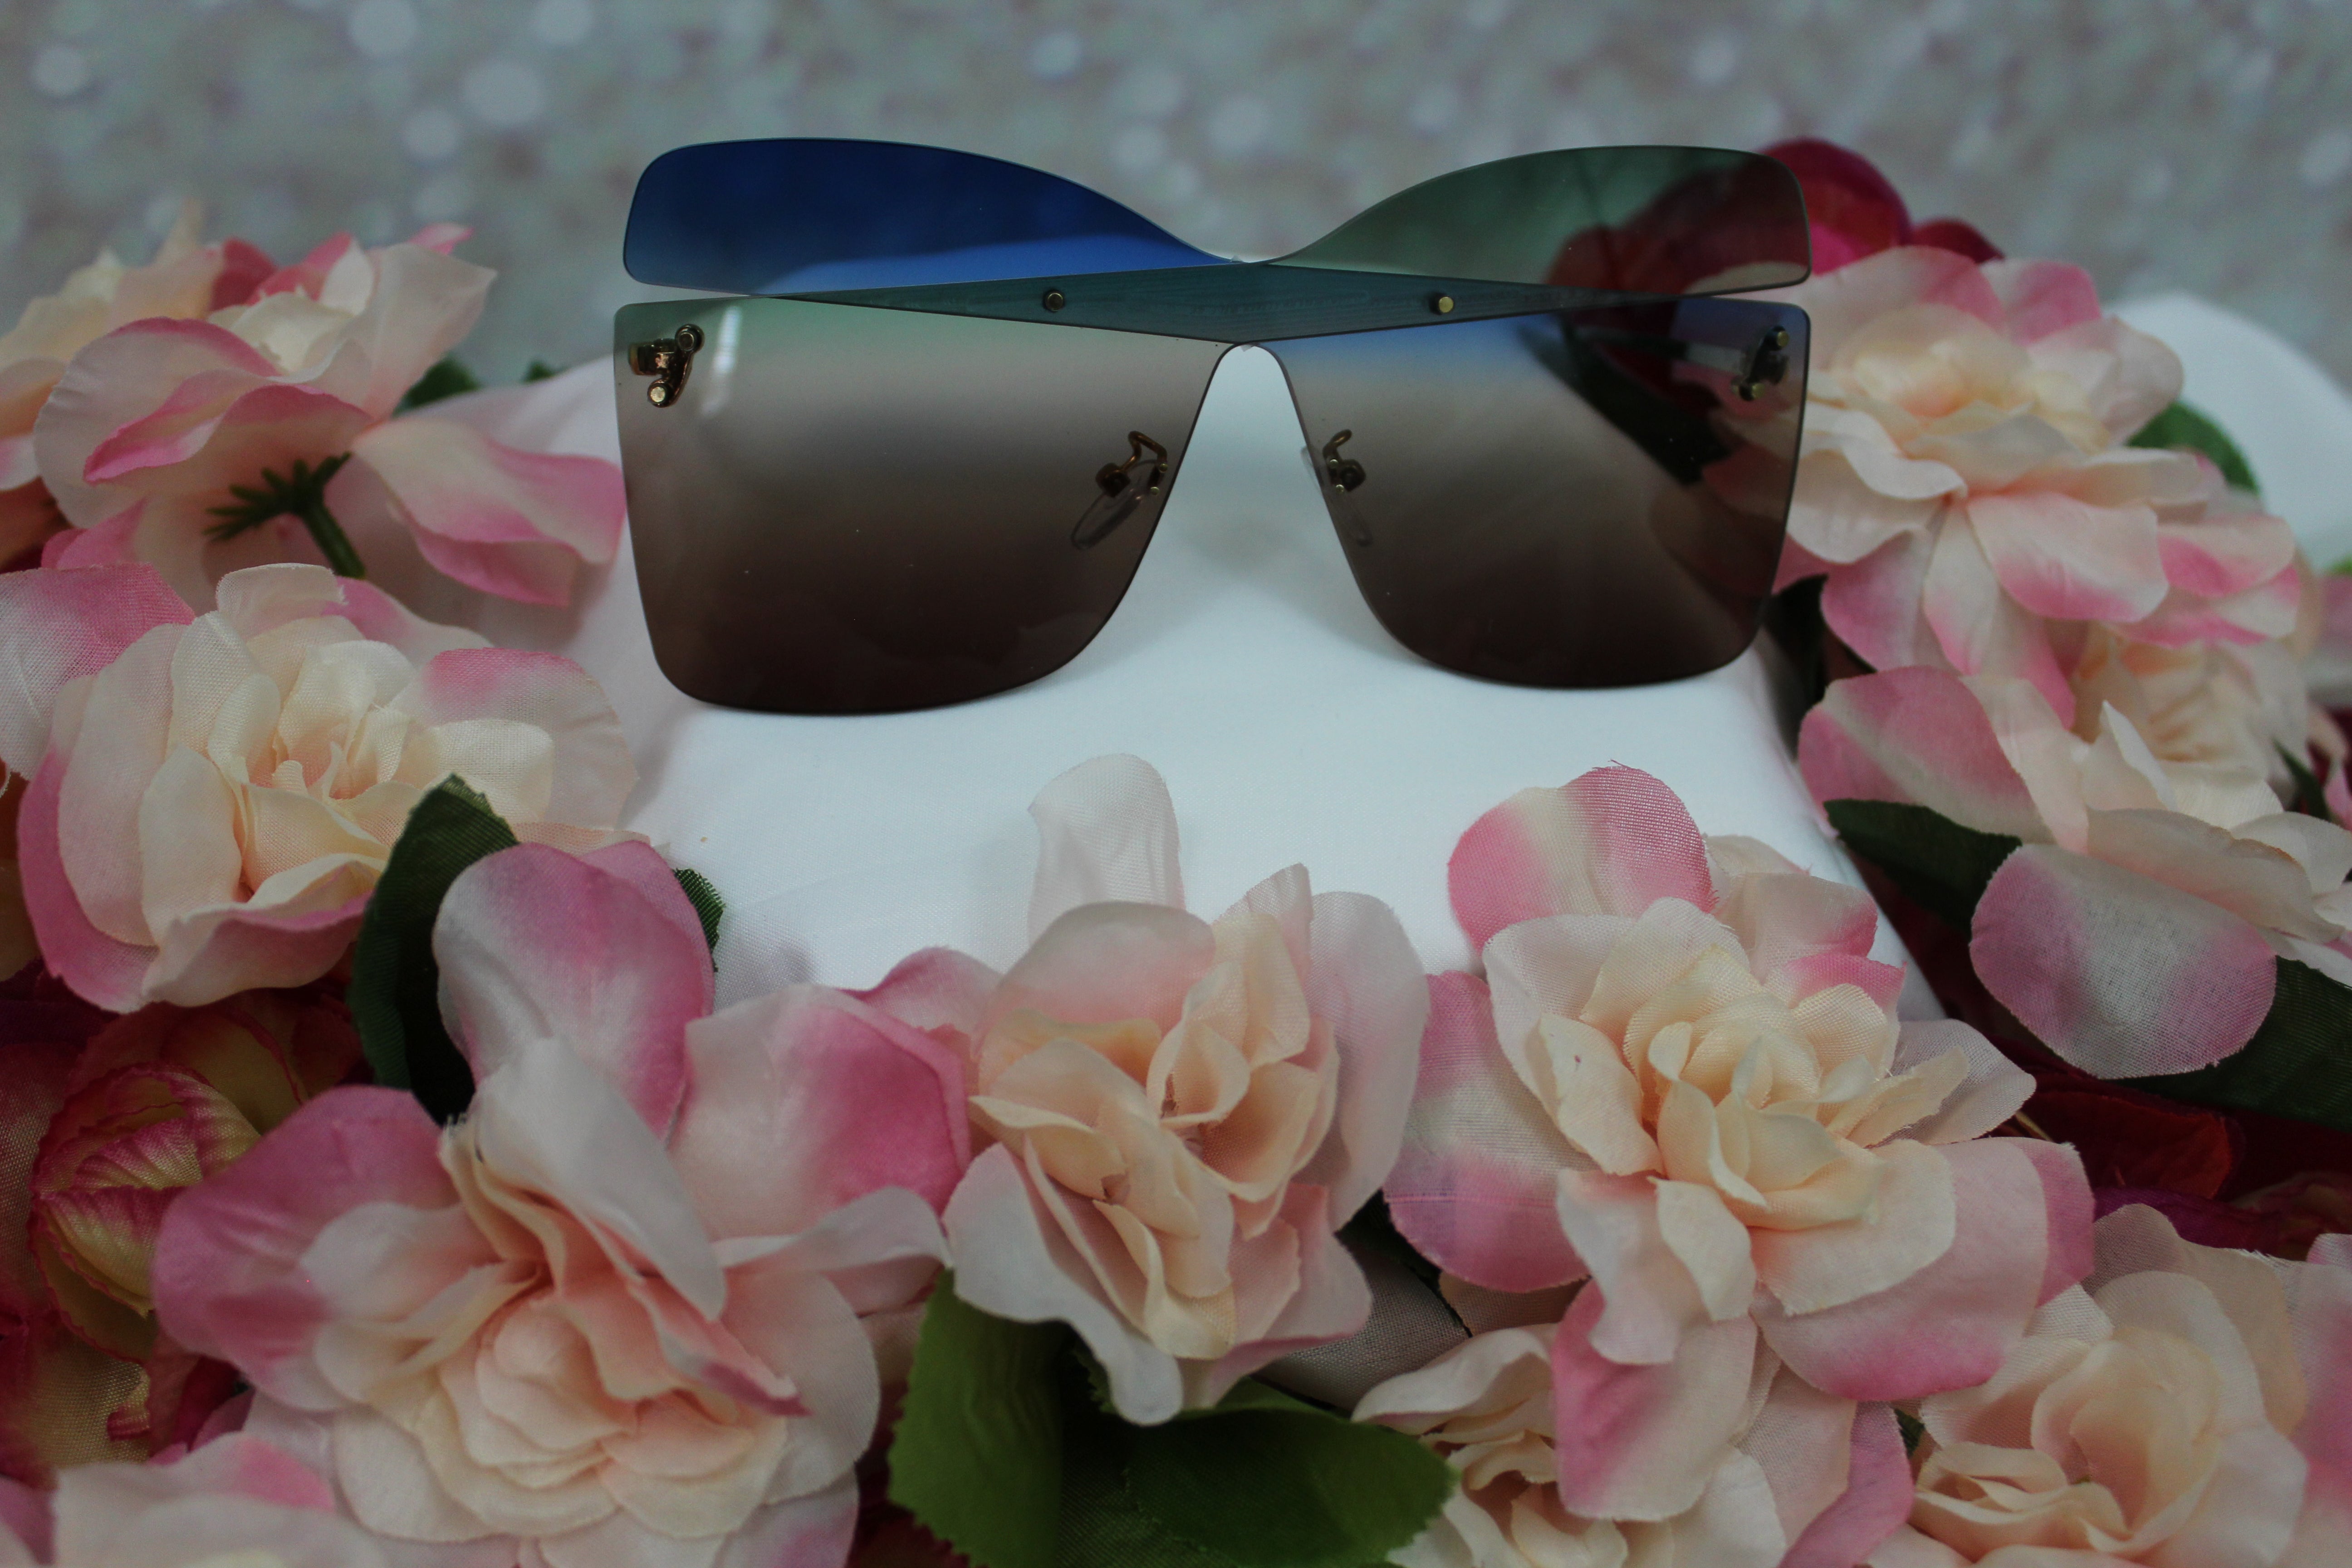 Chanel Butterfly Blue Light Glasses - Metal, Gold - Polarized - UV Protected - Women's Sunglasses - 2212S C395/SB